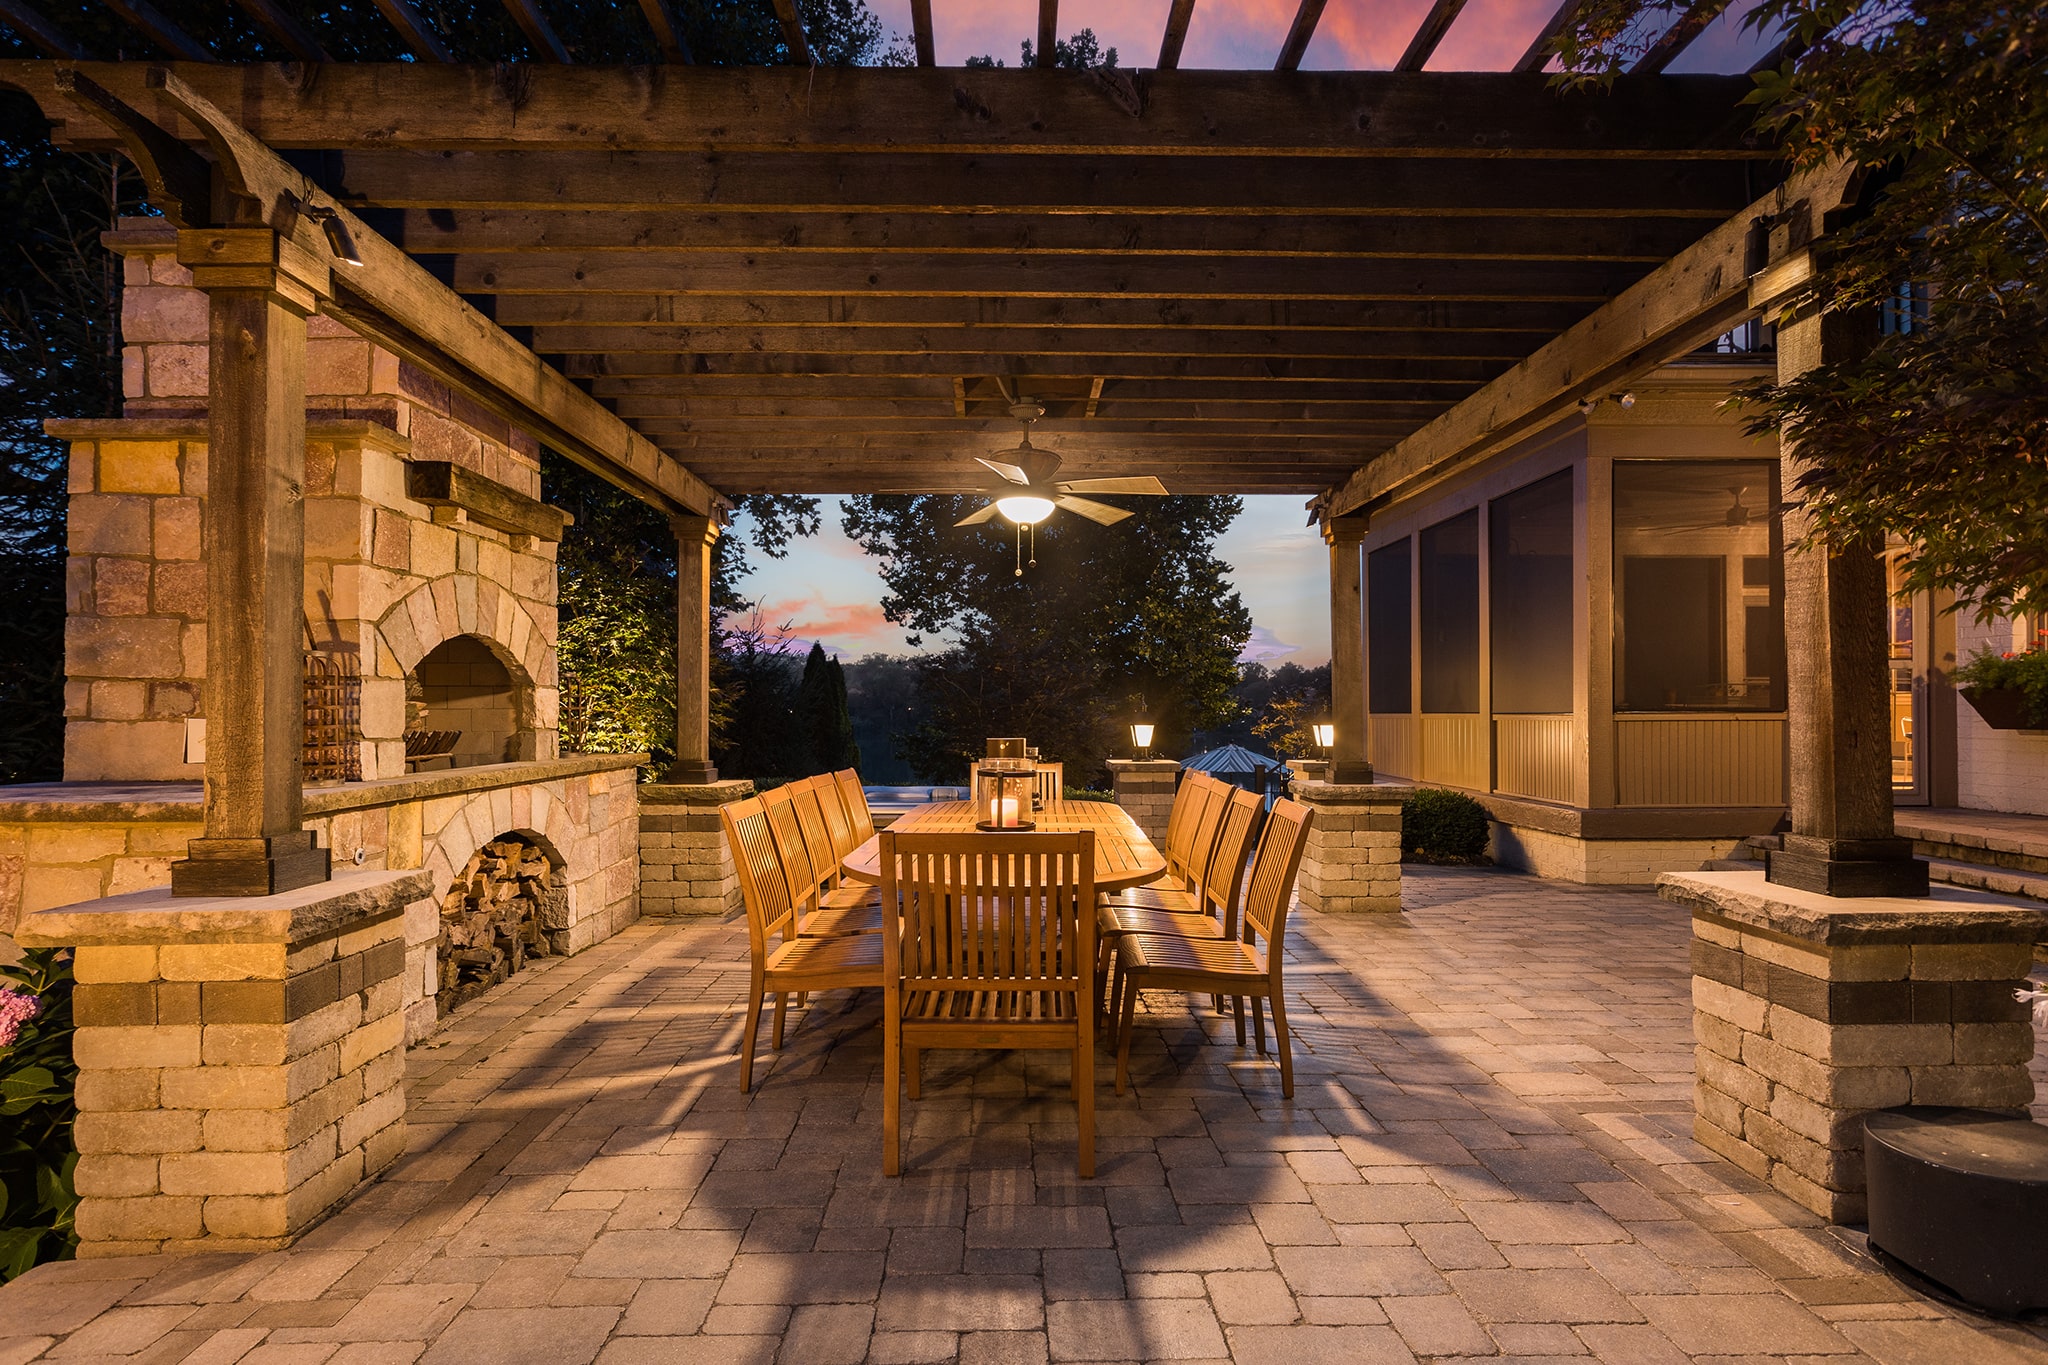 Paver patio dining area with stone fireplace